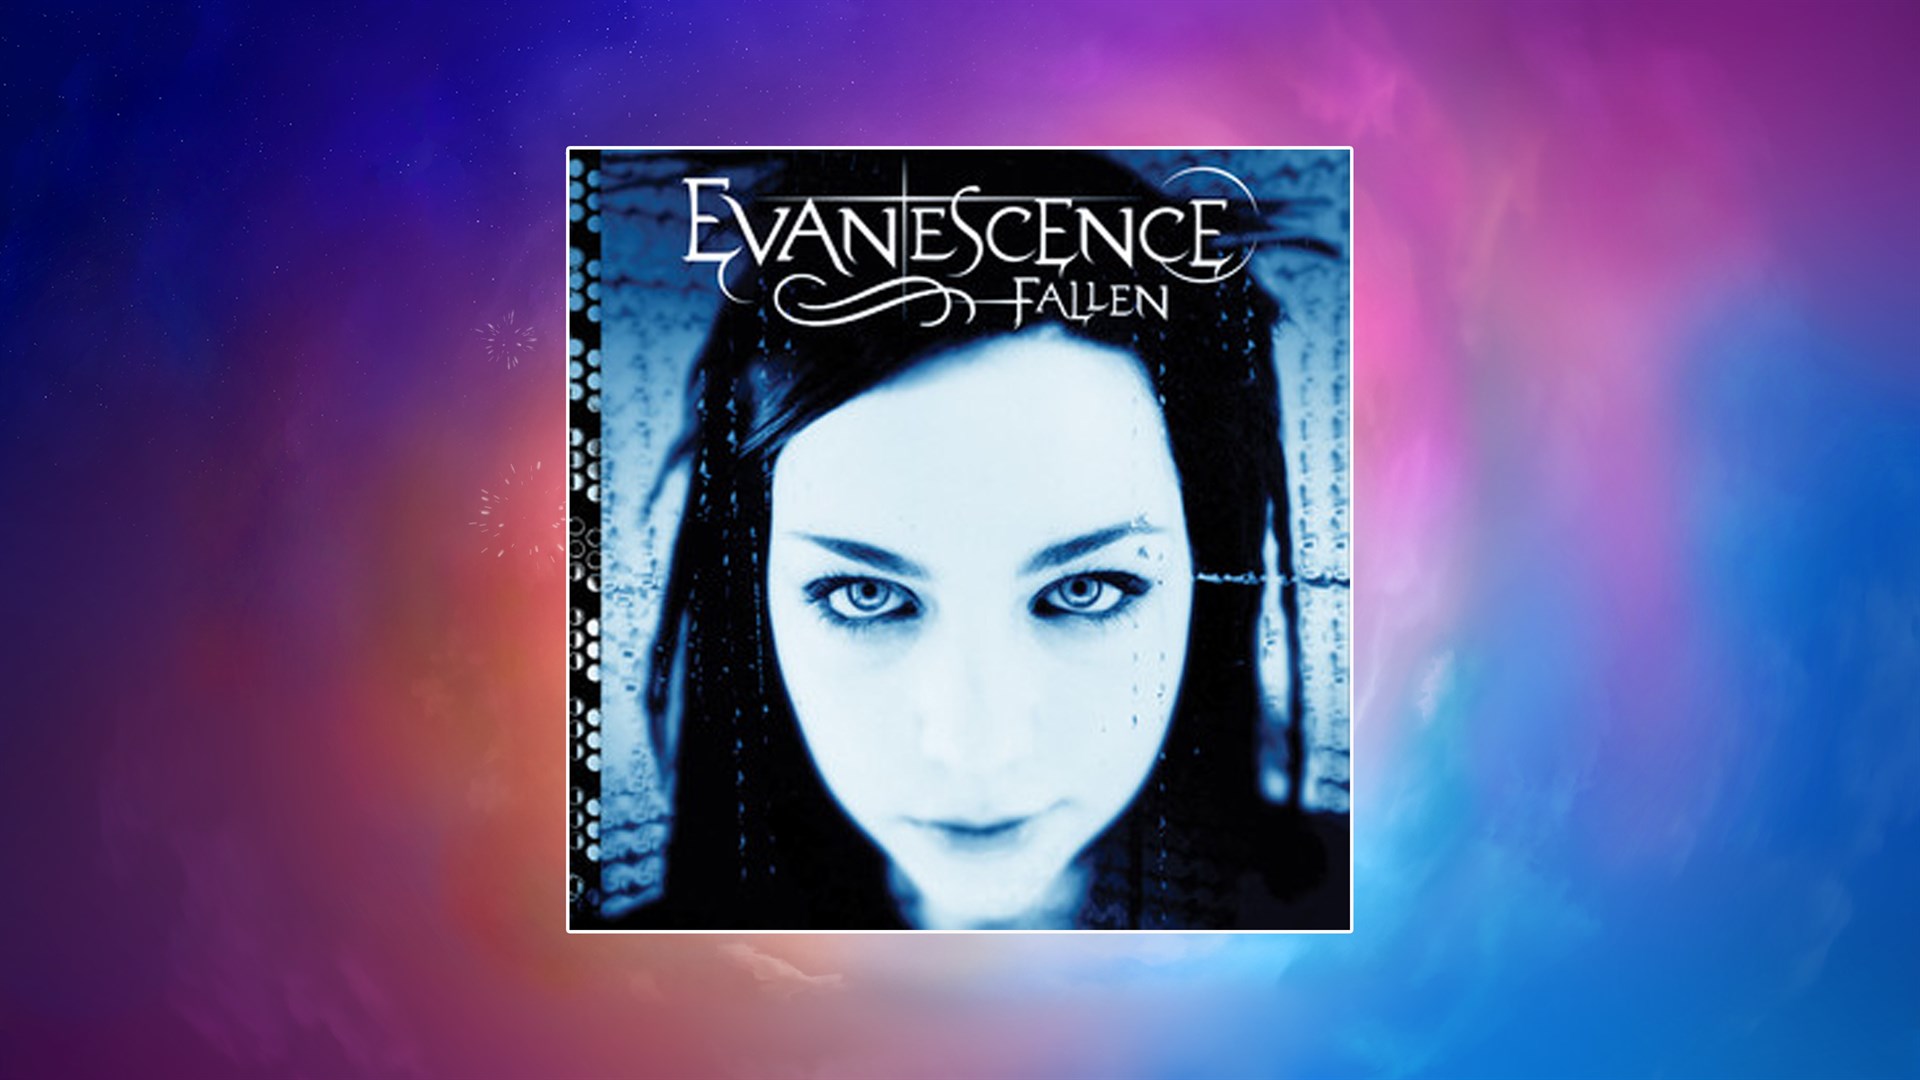 Эванесенс ми ту лайф текст. Эванесенс. Эванесенс бринг. Evanescence bring me to Life. Evanescence bring me to Life обложка.